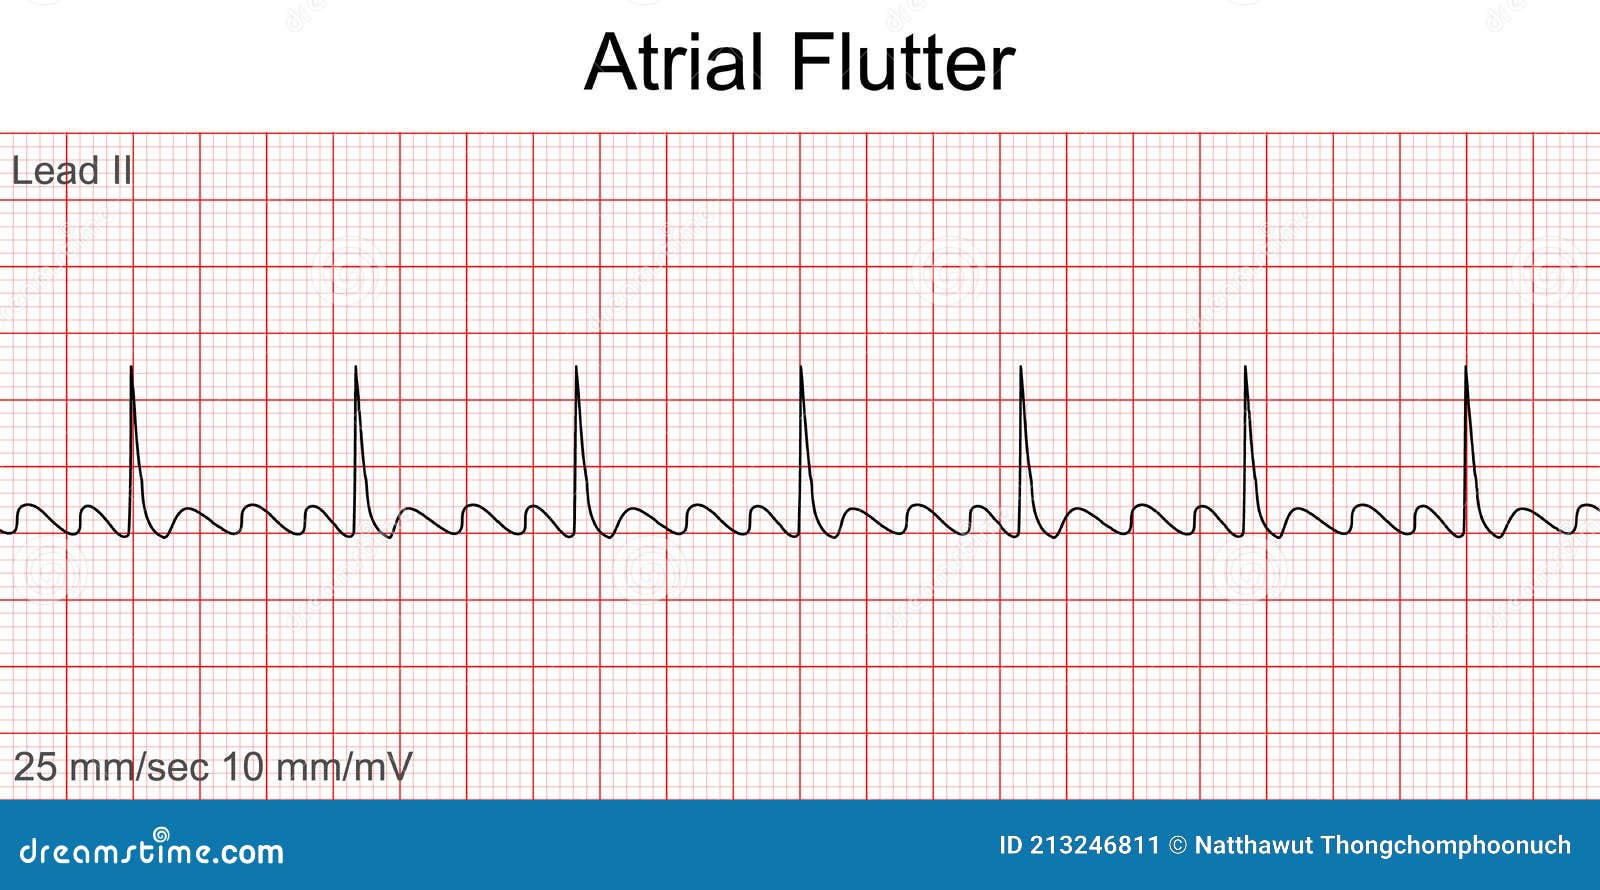 electrocardiogram show atrial flutter pattern.